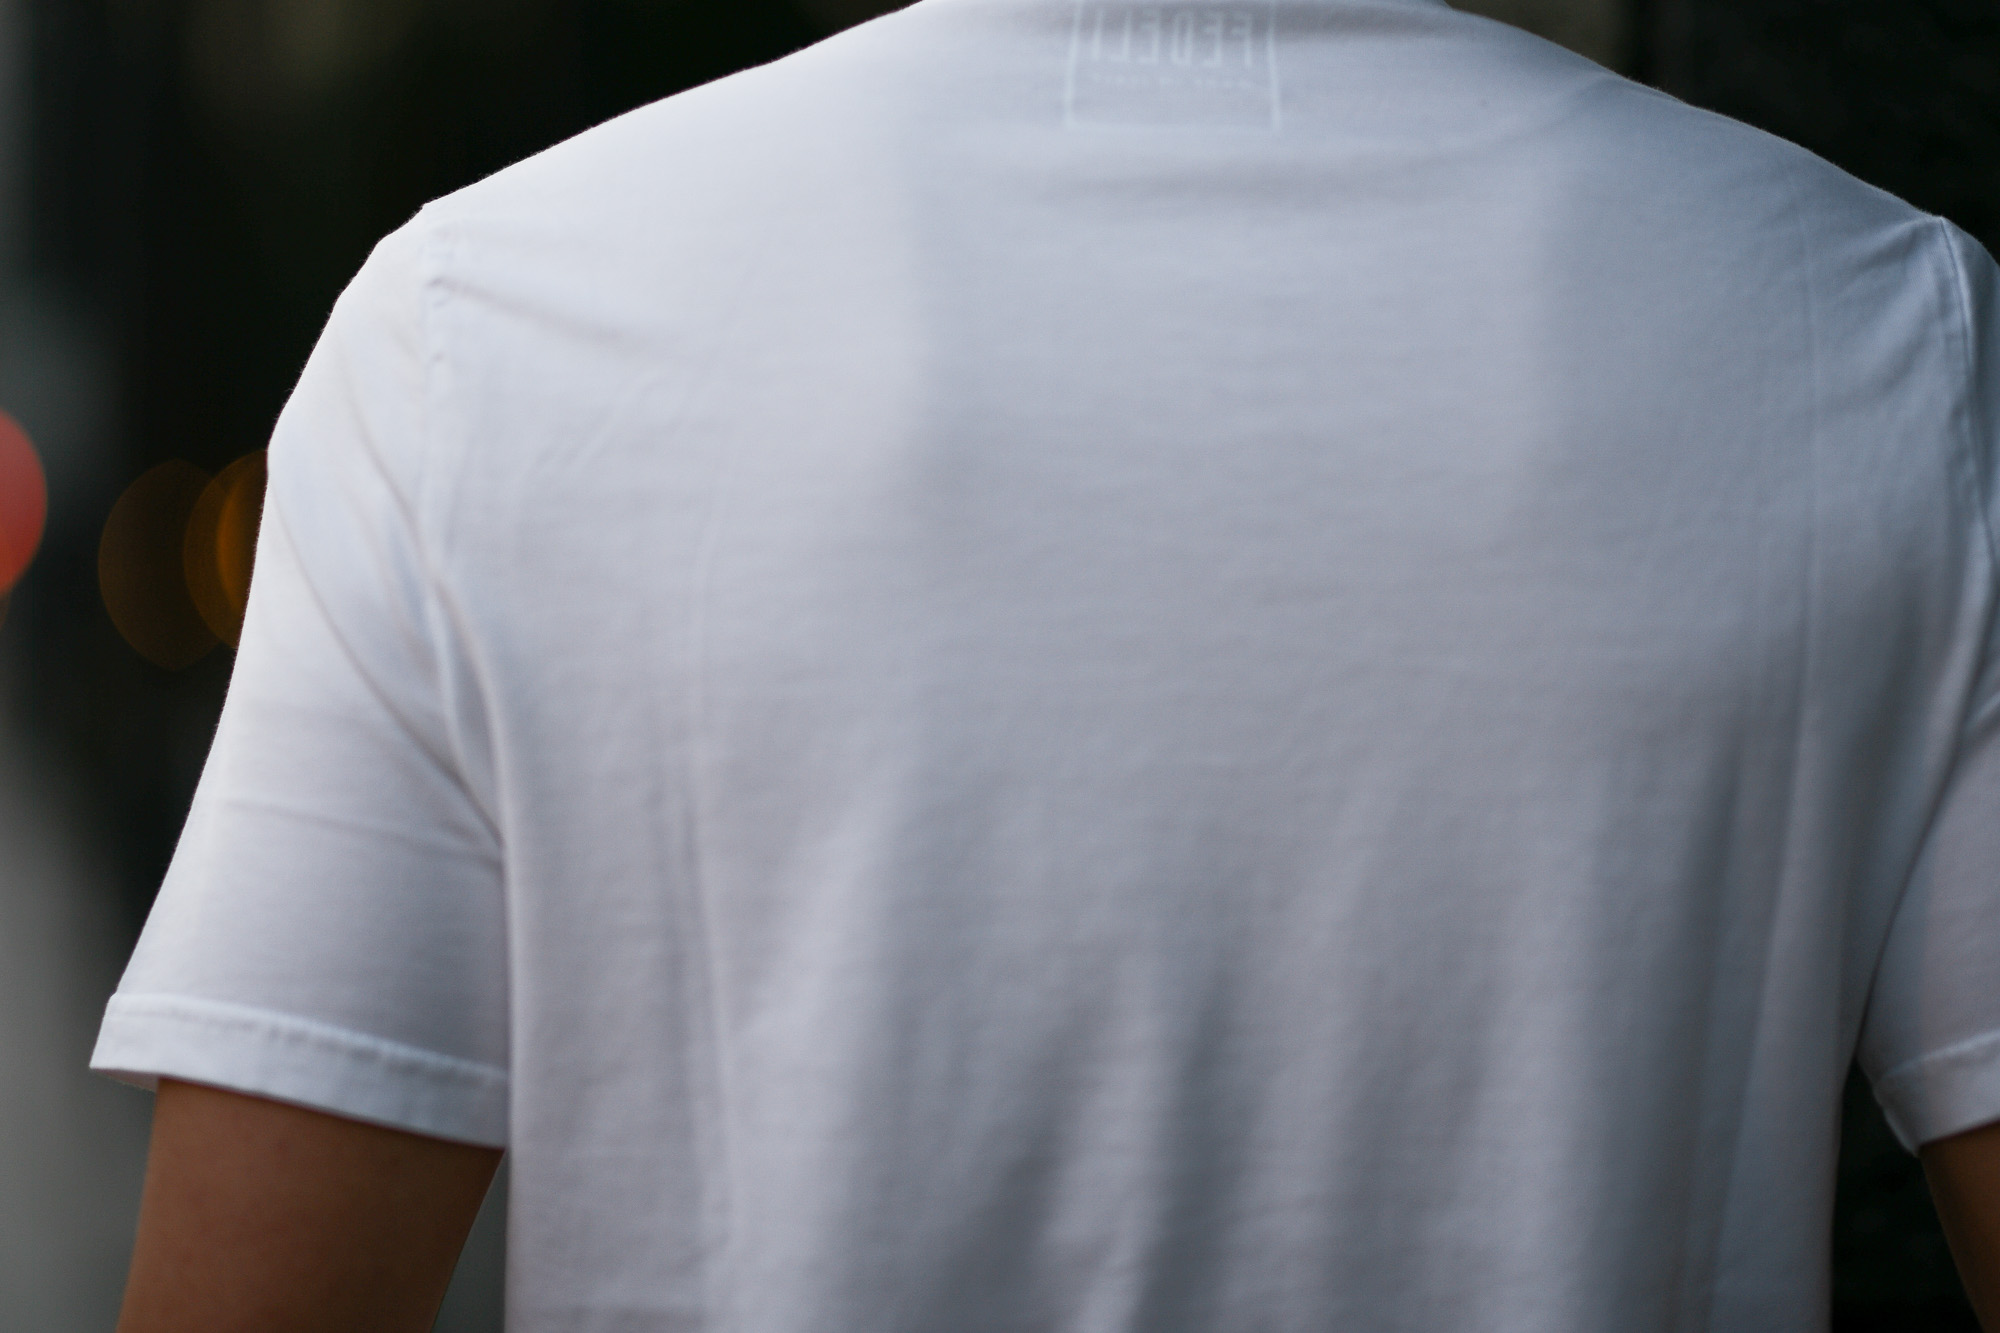 FEDELI(フェデーリ) Crew Neck T-shirt (クルーネック Tシャツ) ギザコットン Tシャツ WHITE (ホワイト・41) made in italy (イタリア製) 2020 春夏新作 愛知 名古屋 altoediritto アルトエデリット TEE